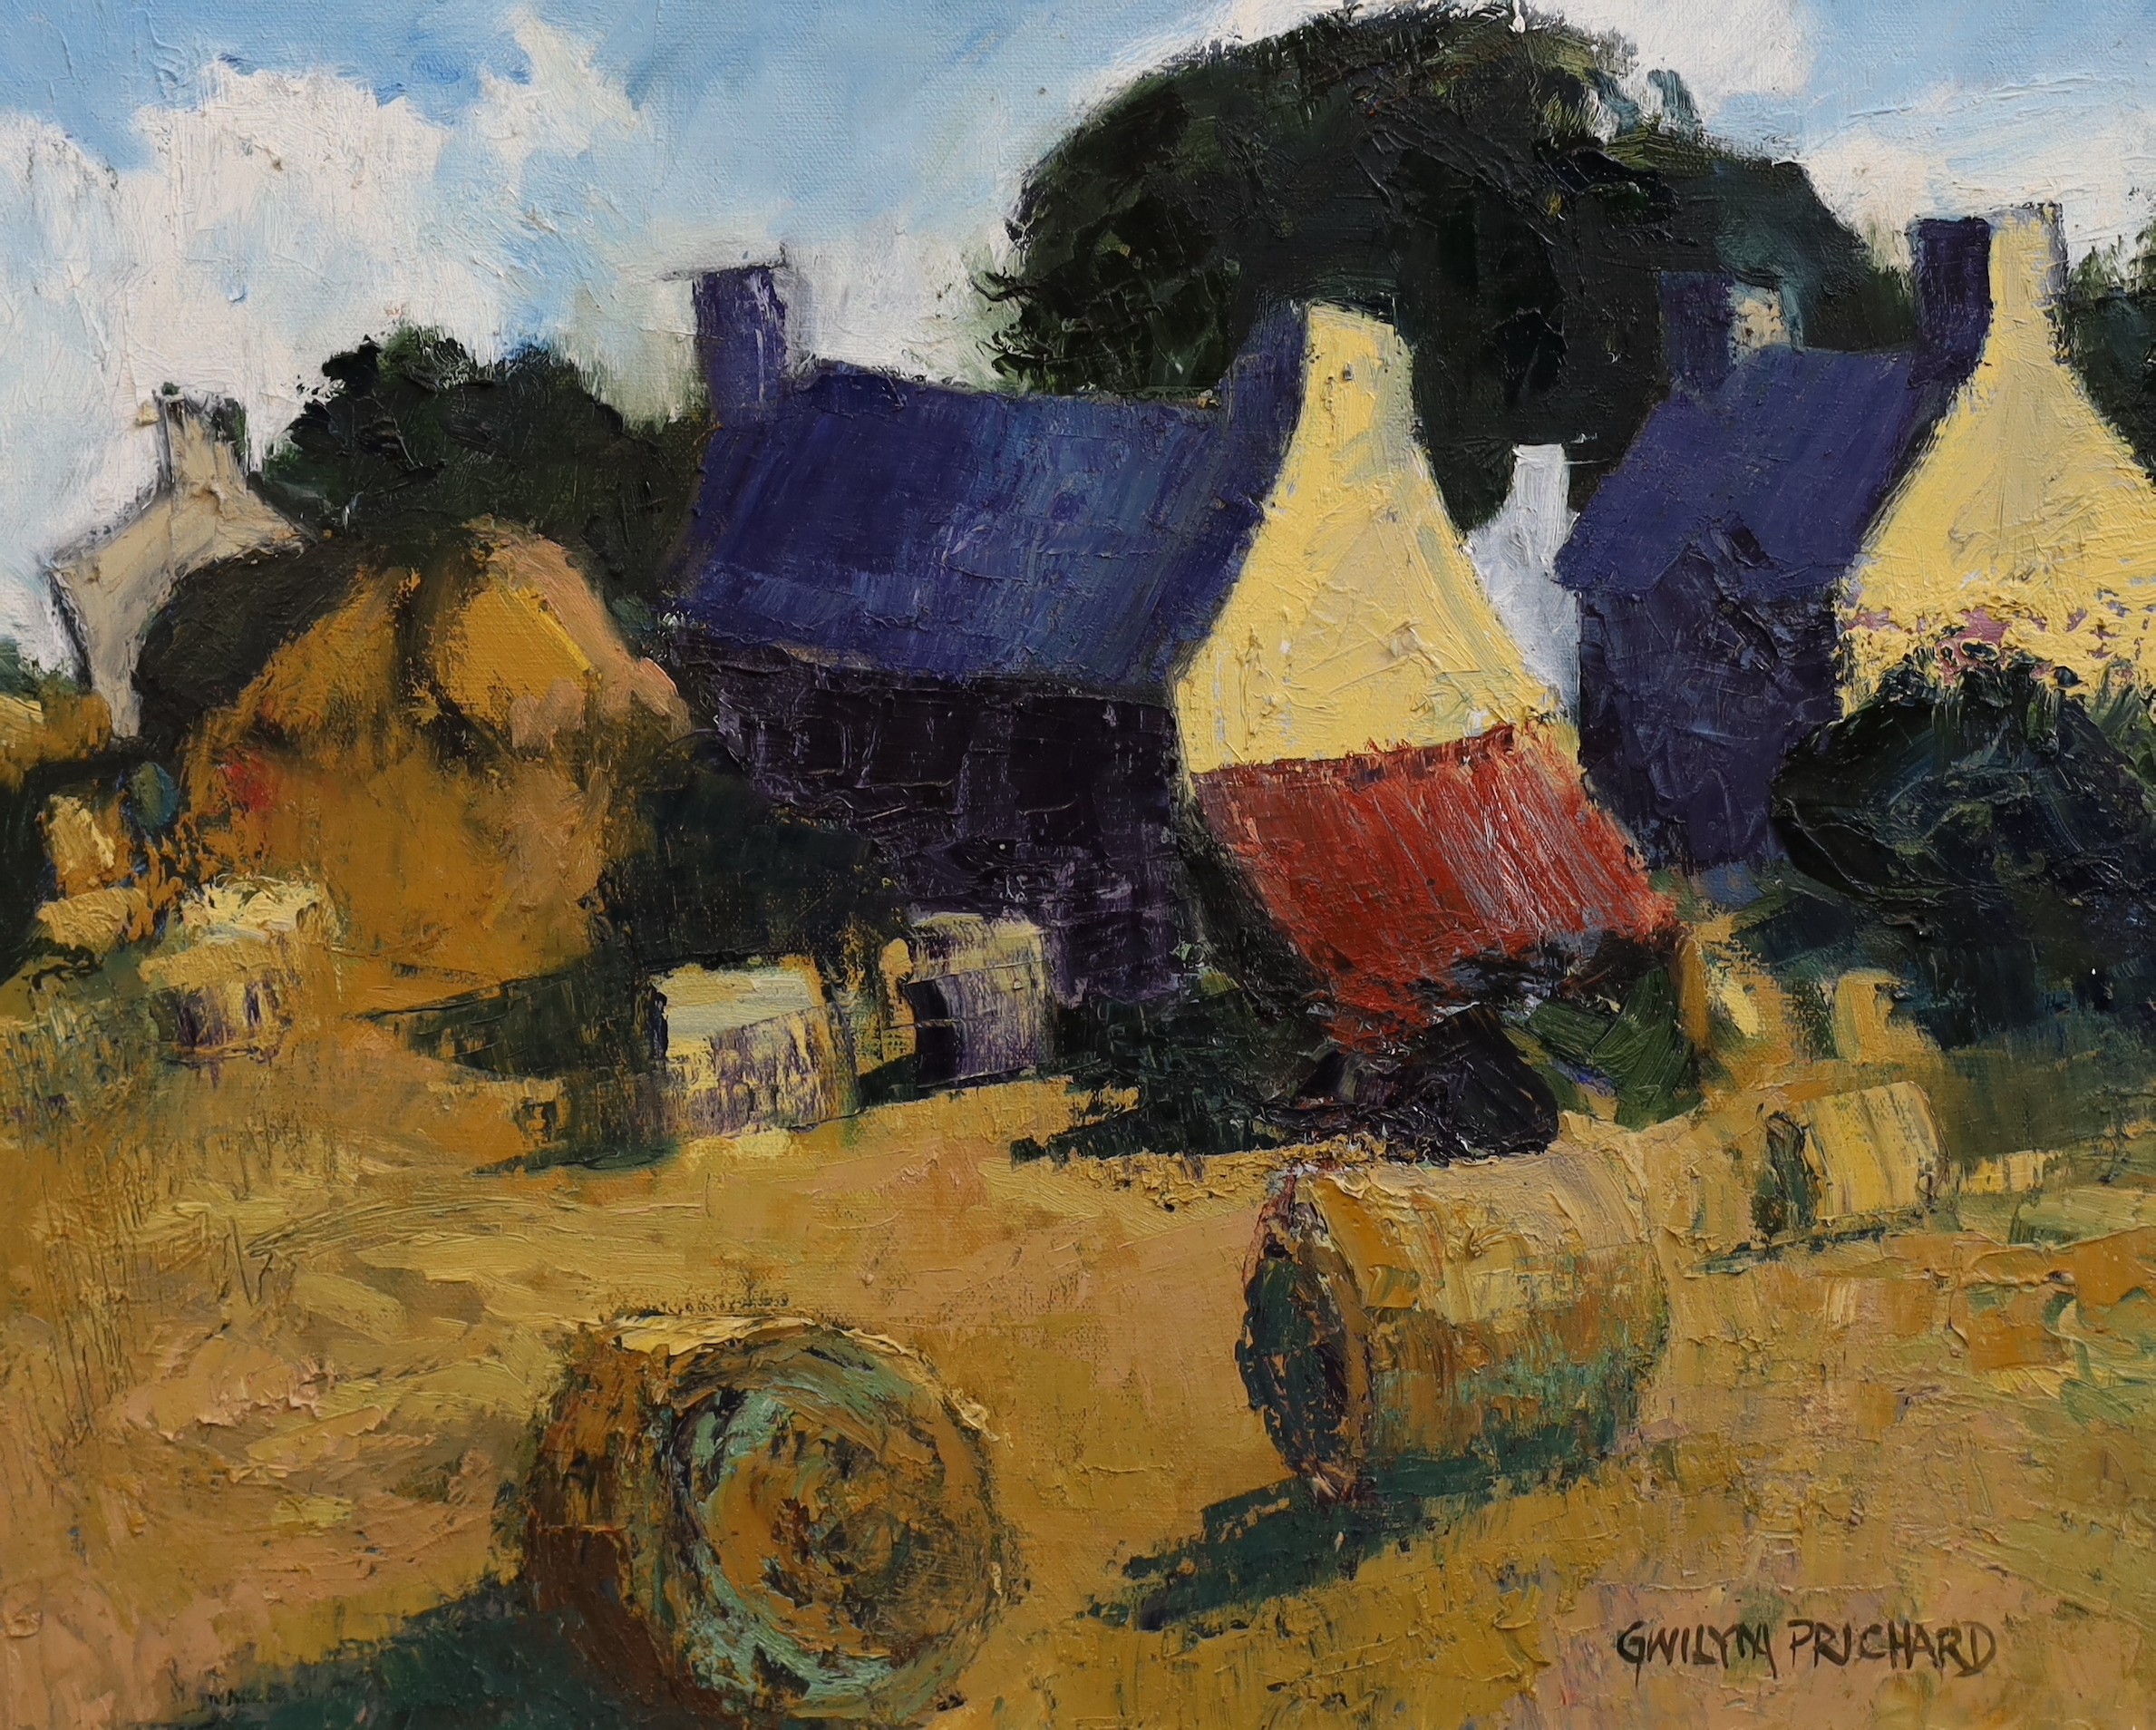 Gwilym Prichard (Welsh, 1931-2015), 'Brittany - Summer', oil on canvas, 44 x 53cm